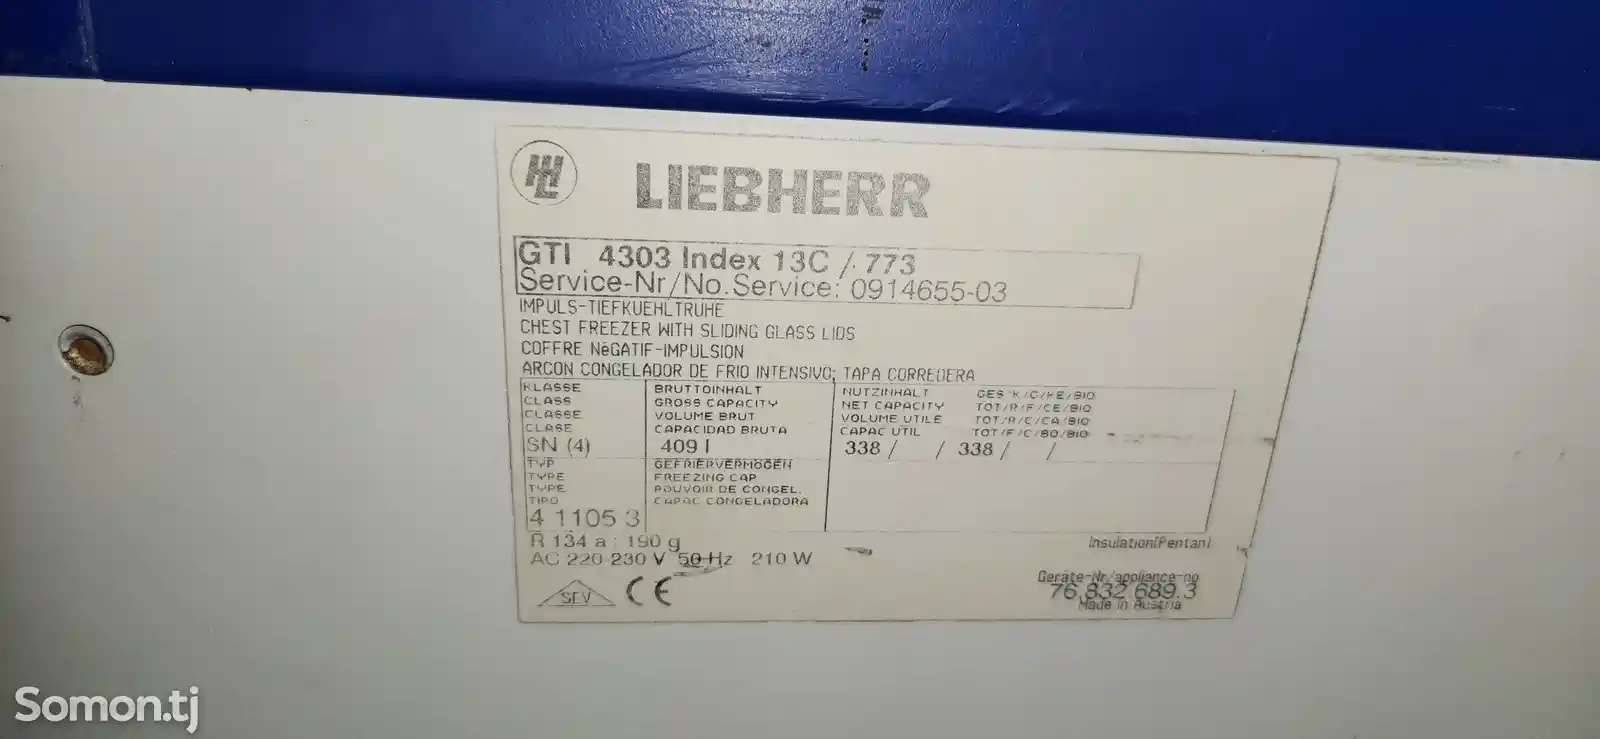 Морозильник Liebherr GTI 4303 Index-2